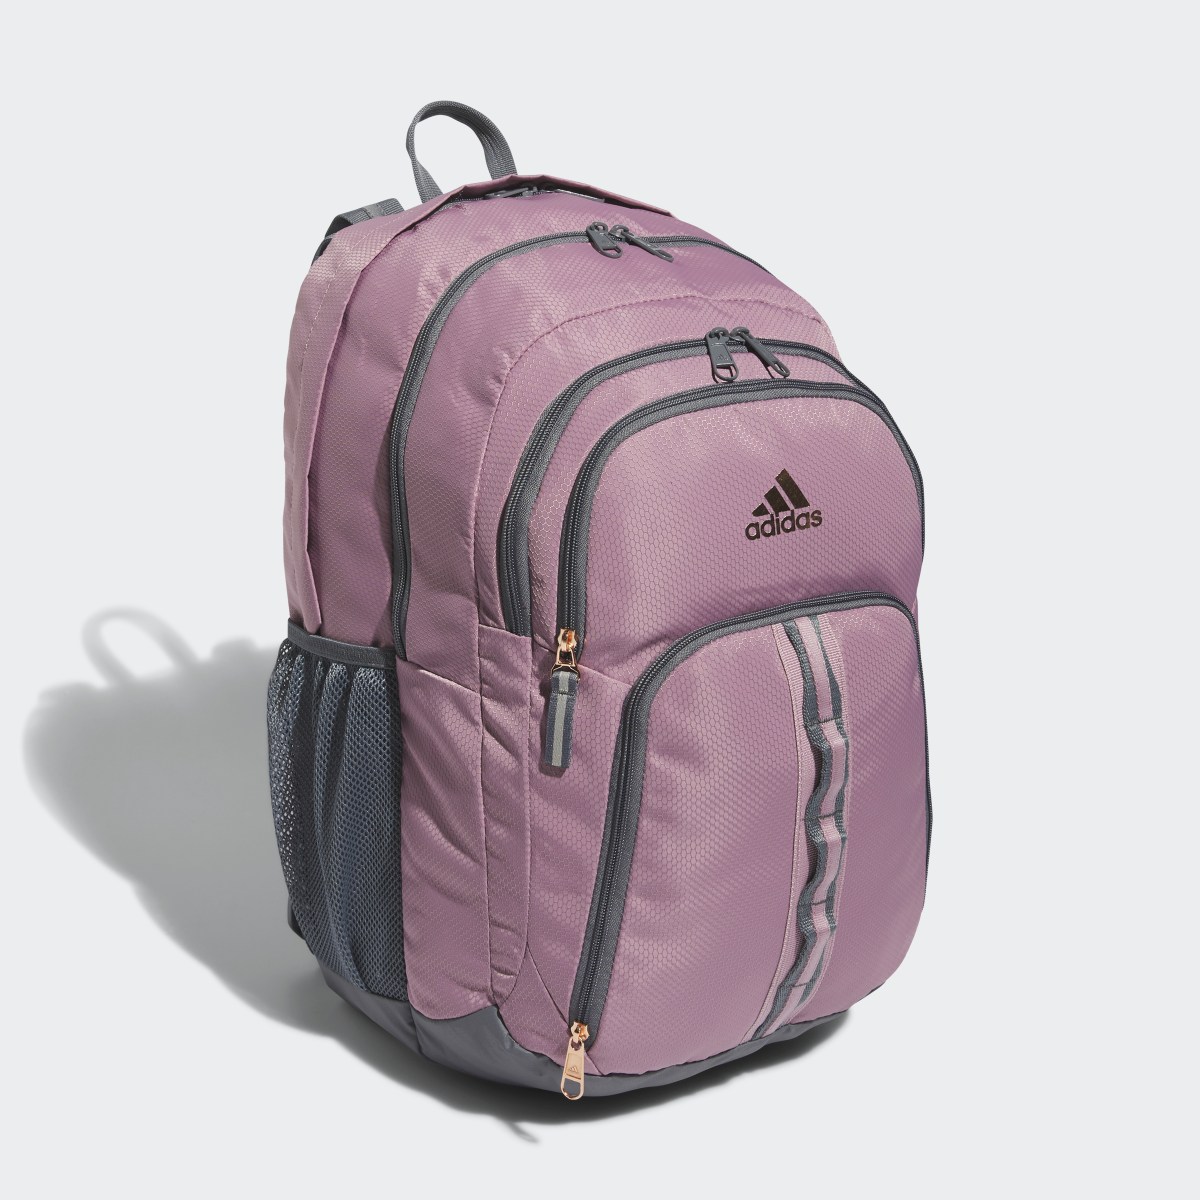 Adidas Prime Backpack. 4